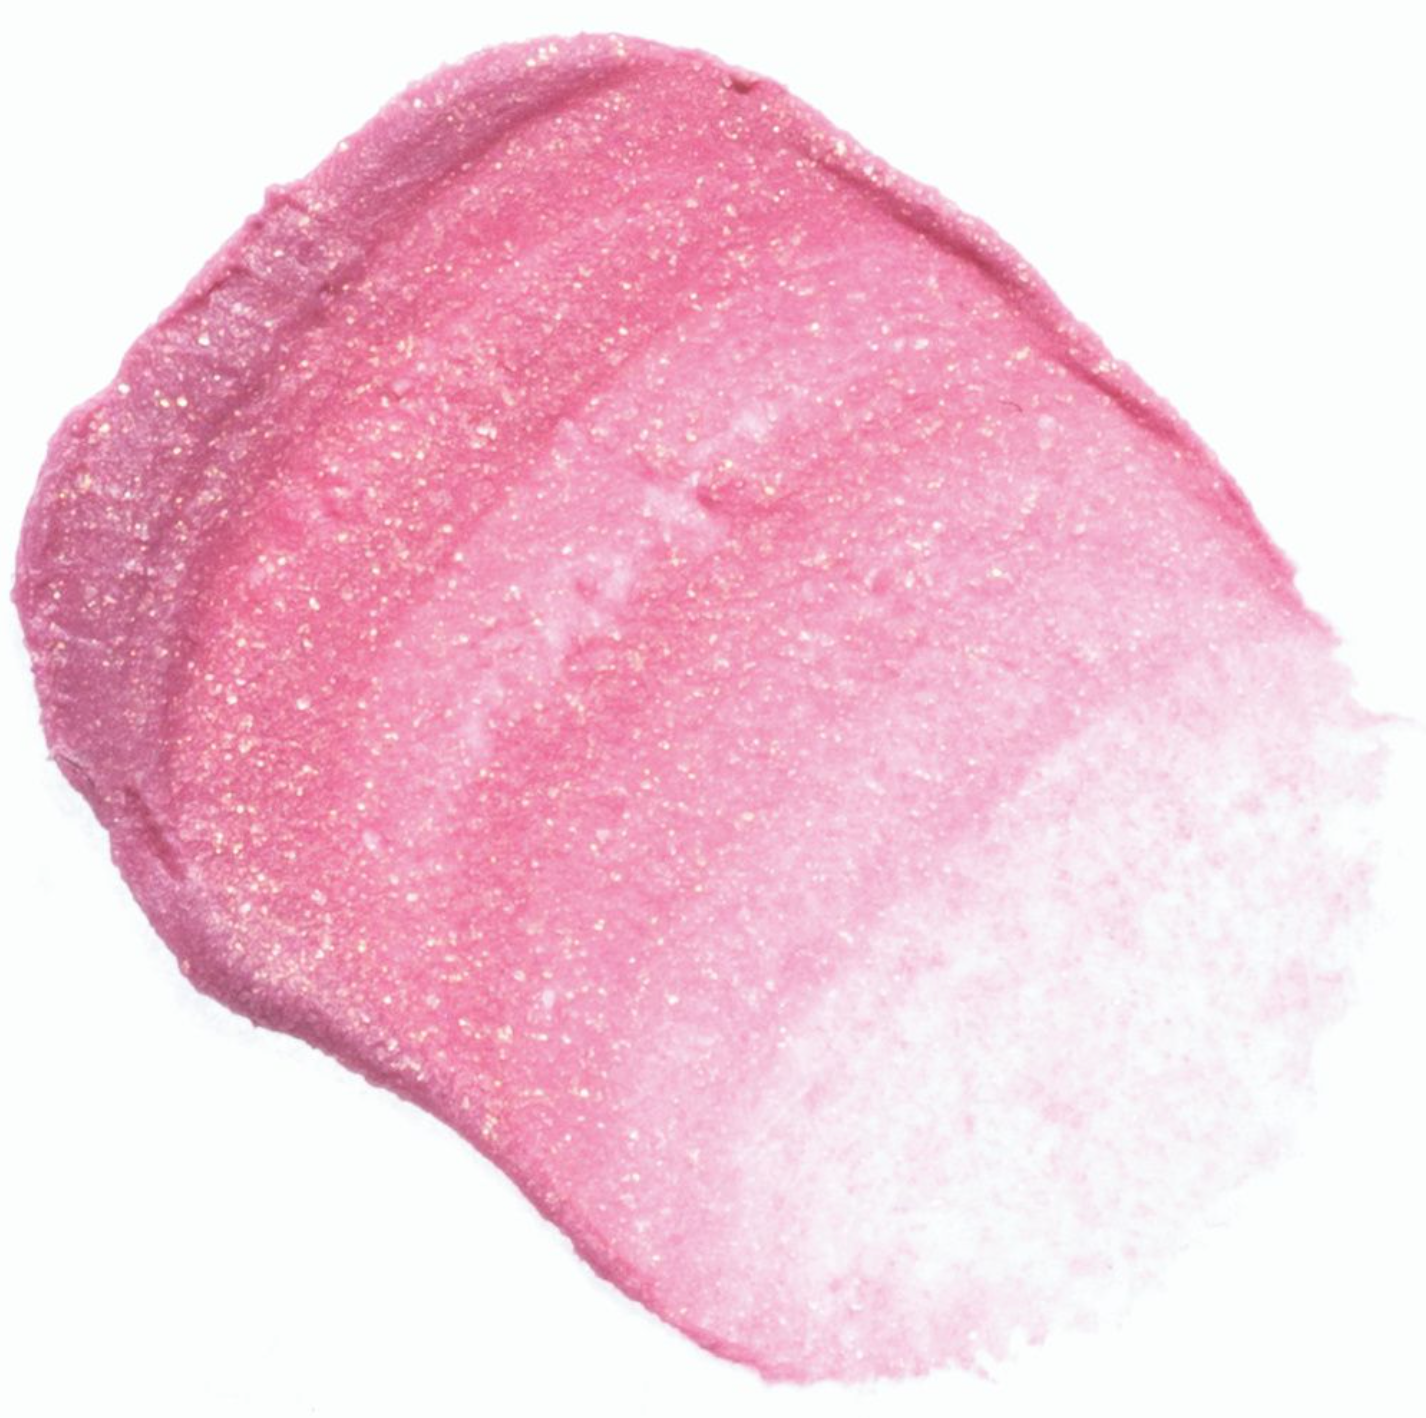 MUD Cosmetics Lipstick, Pink Twinkle swatch